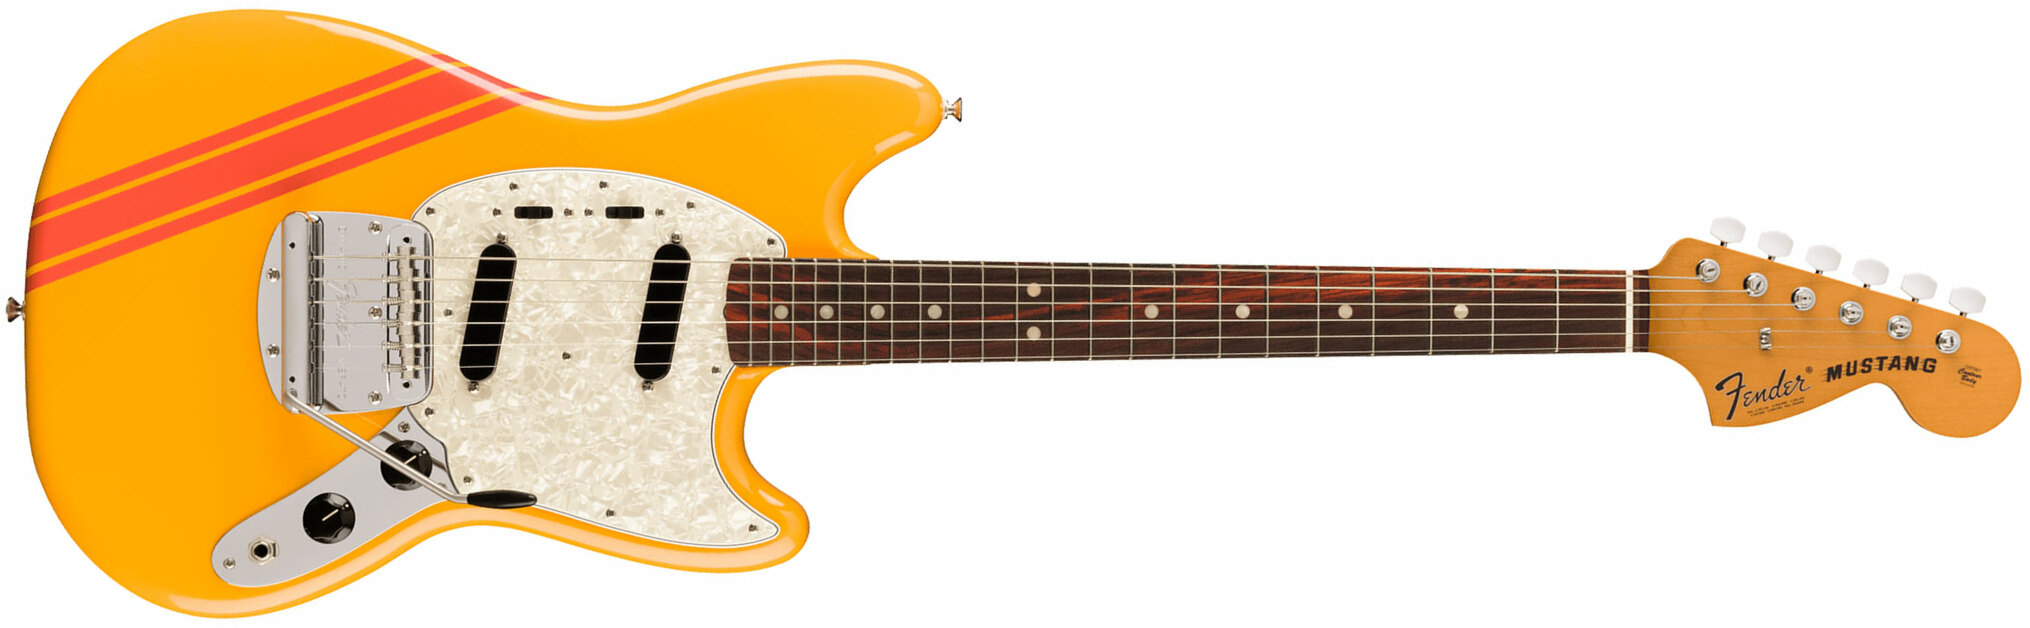 Fender Mustang 70s Competition Vintera 2 Mex 2s Trem Rw - Competition Orange - Retro-rock elektrische gitaar - Main picture